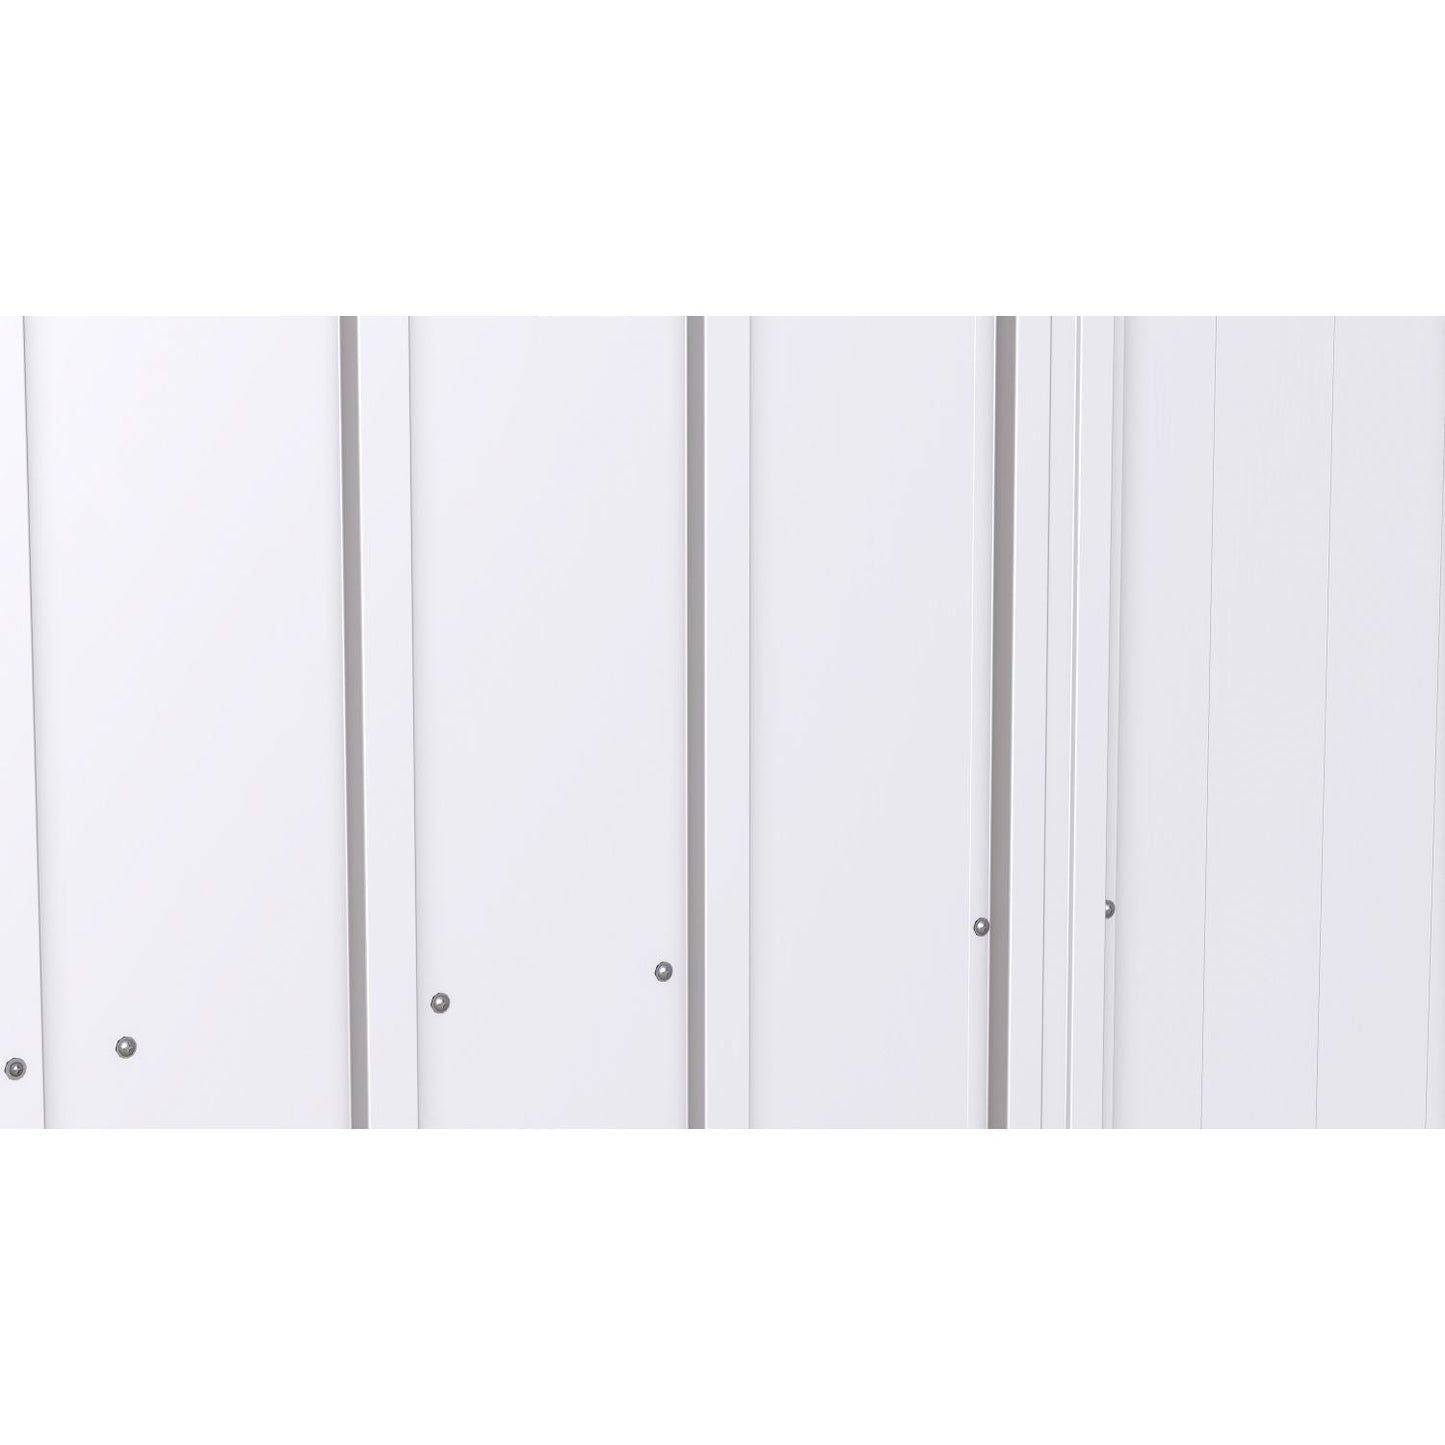 Arrow Metal Storage Shed Kit Arrow | Classic Steel Storage Shed, 10x14 ft., Flute Grey CLG1014FG